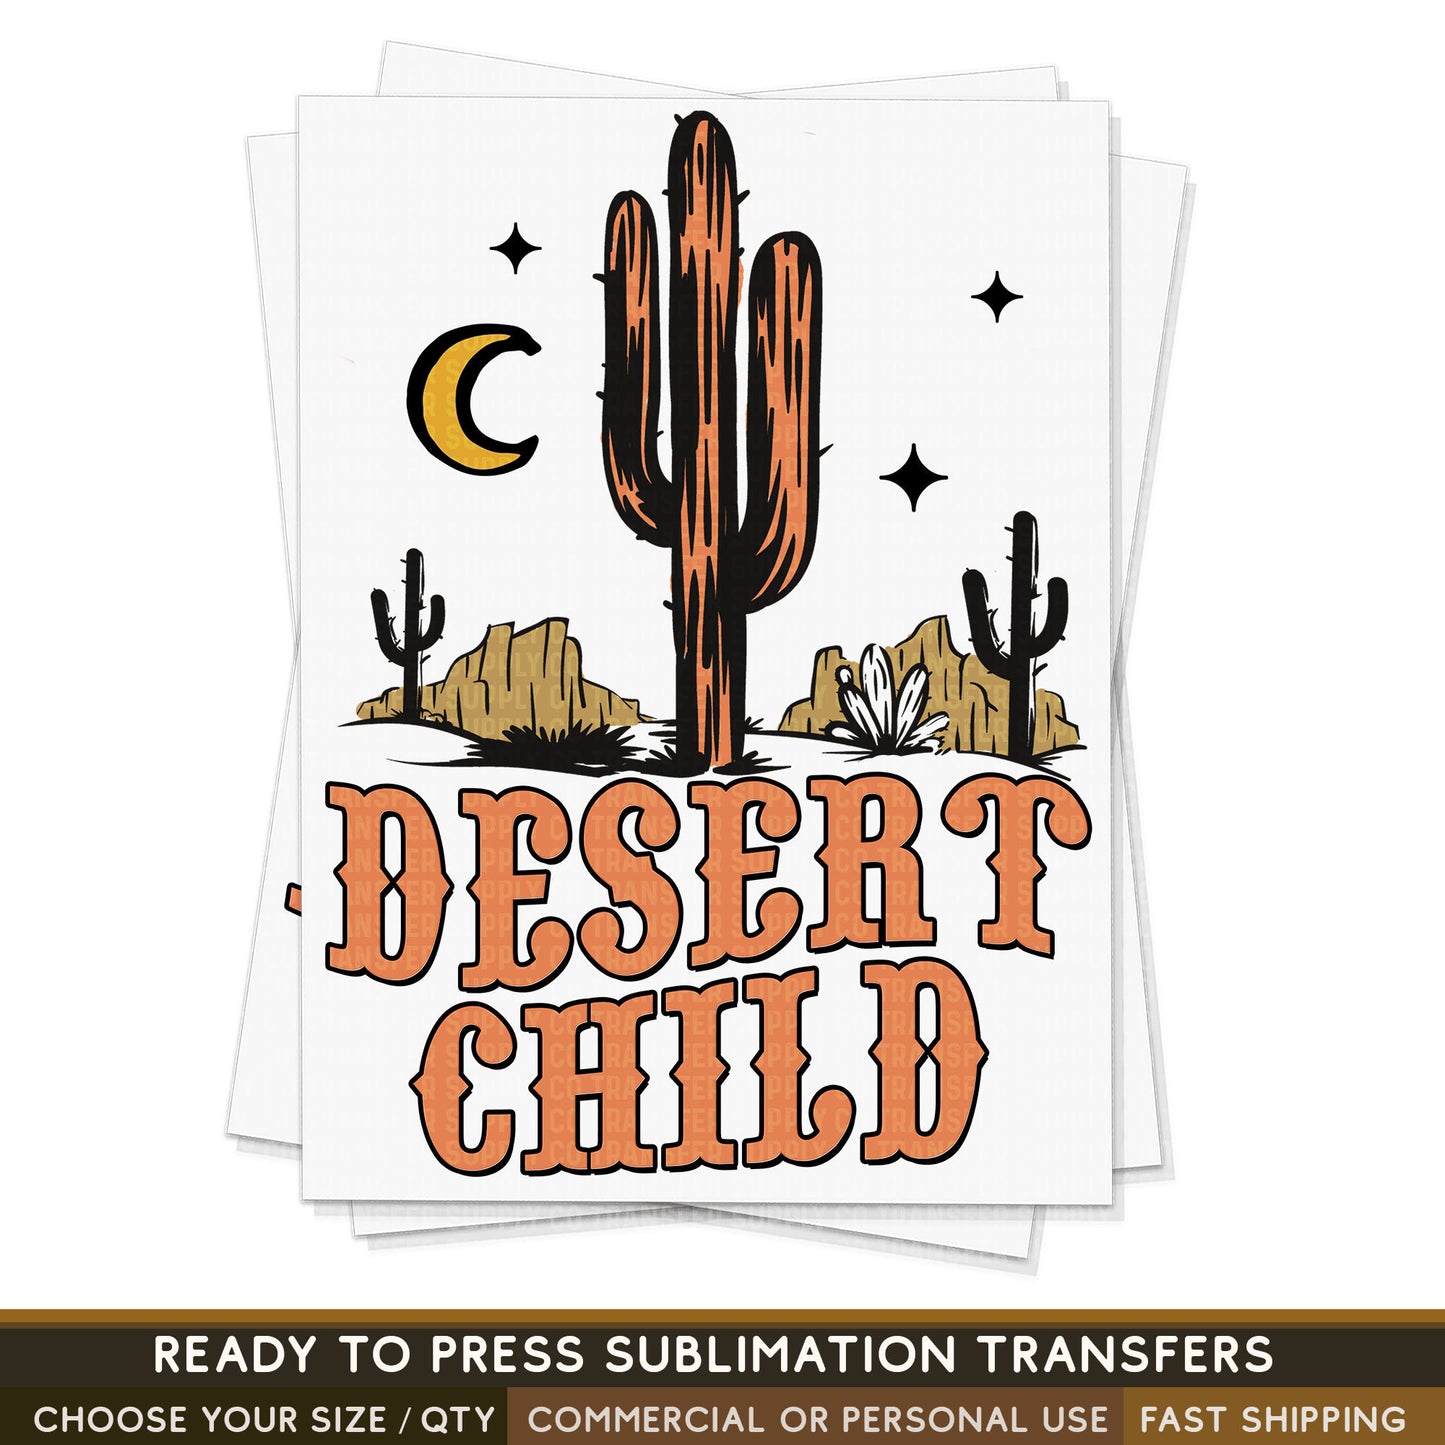 Western Desert Child, Ready To Press Sublimation Transfers, Ready To Press Transfers,Sublimation Prints, Sublimation Transfers